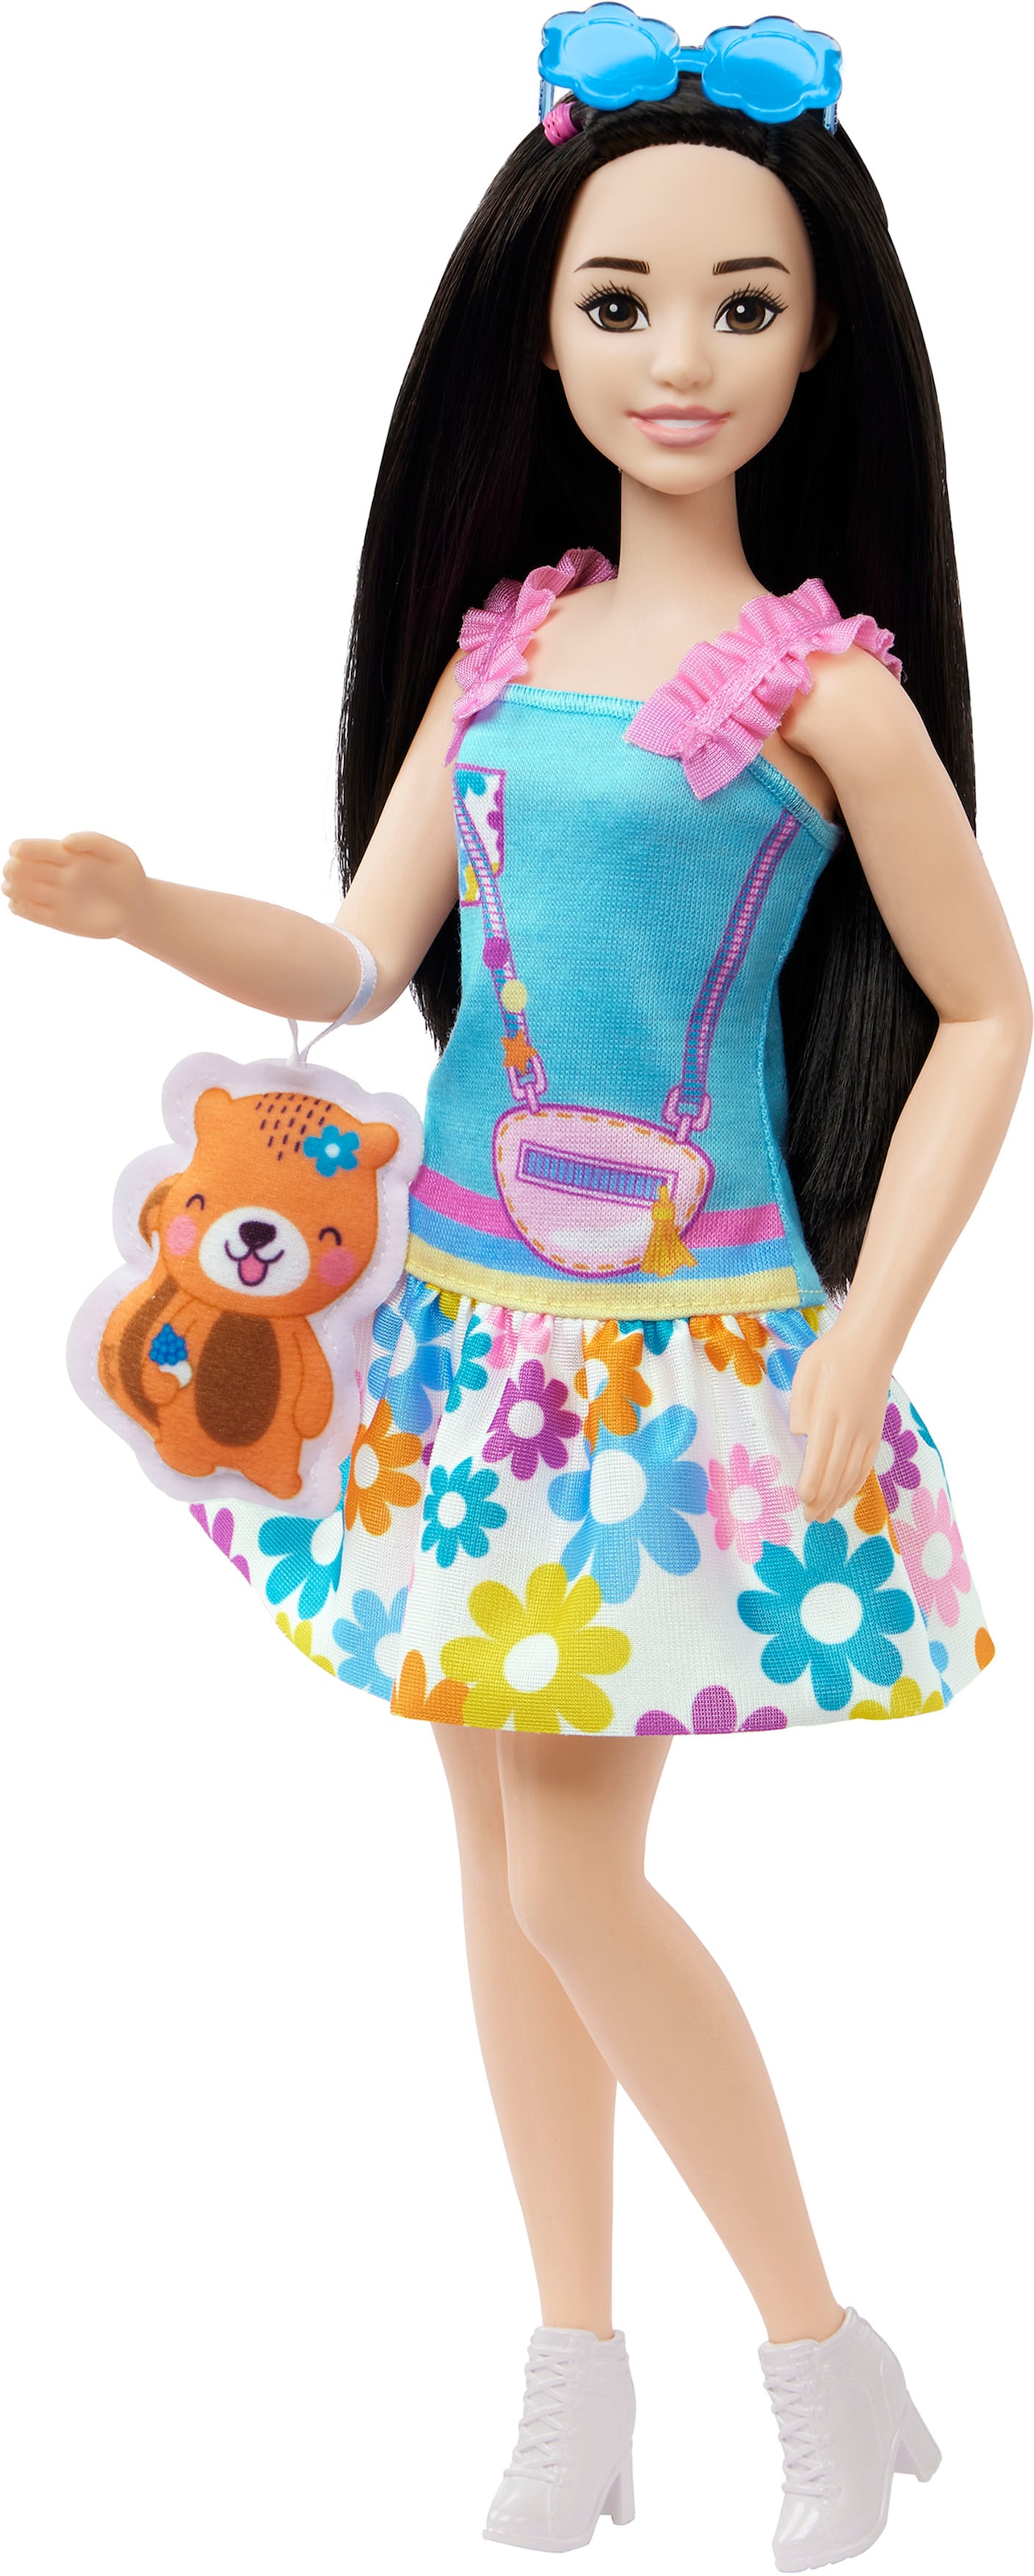 Barbie Anziehpuppe »My First Barbie, Renee«, Größe ca. 34 cm